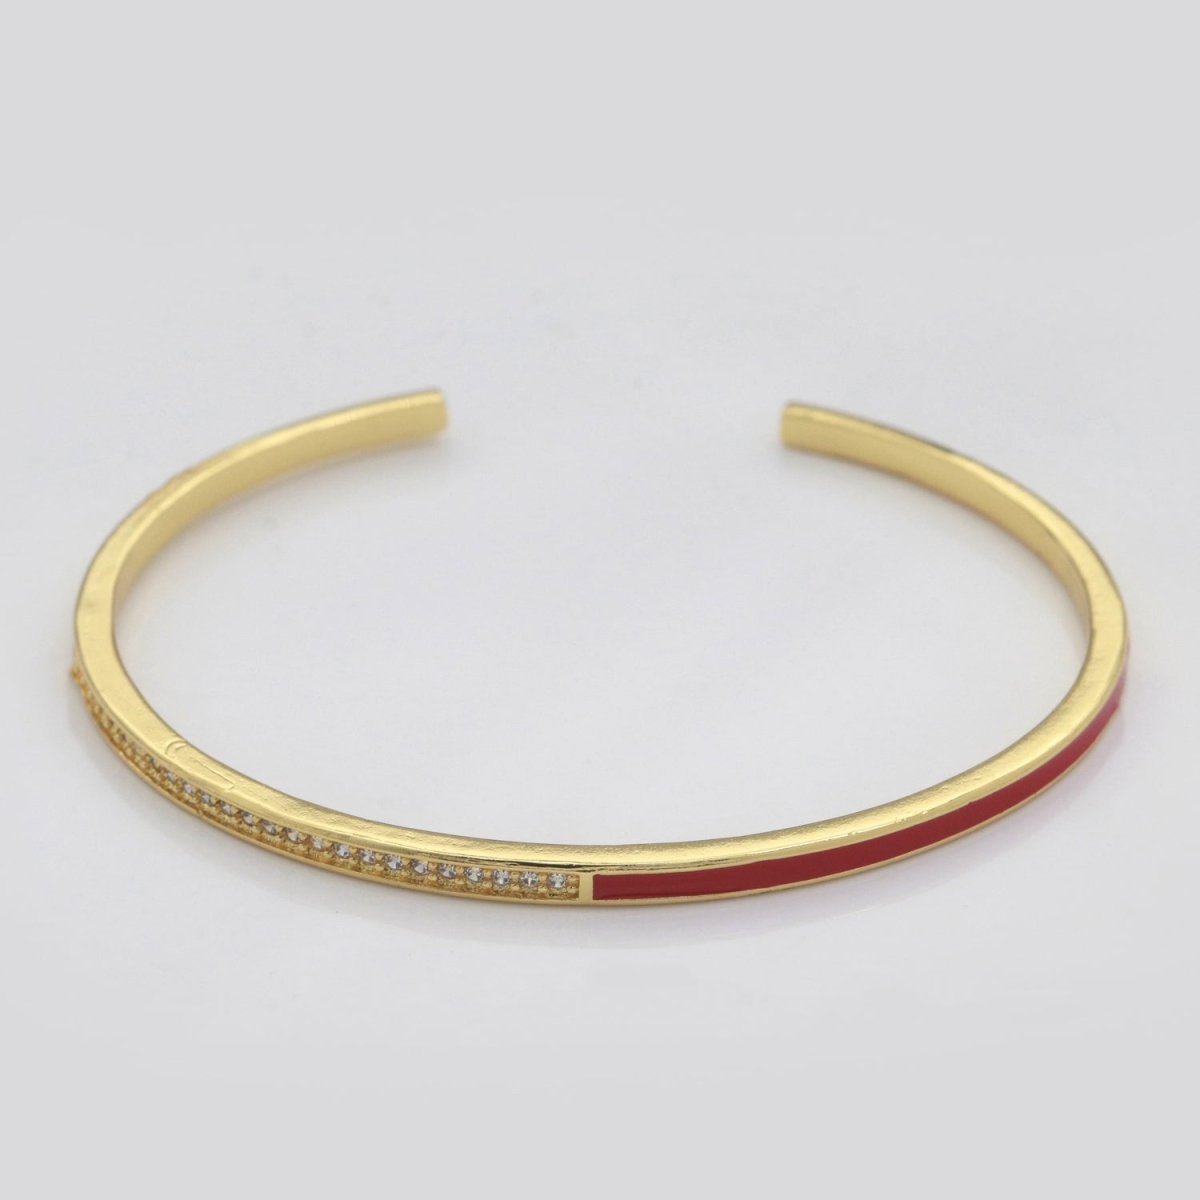 Dainty Cuff Bracelet Minimalist Bangle For Stacking Jewelry | WA-289 to WA-292 Clearance Pricing - DLUXCA